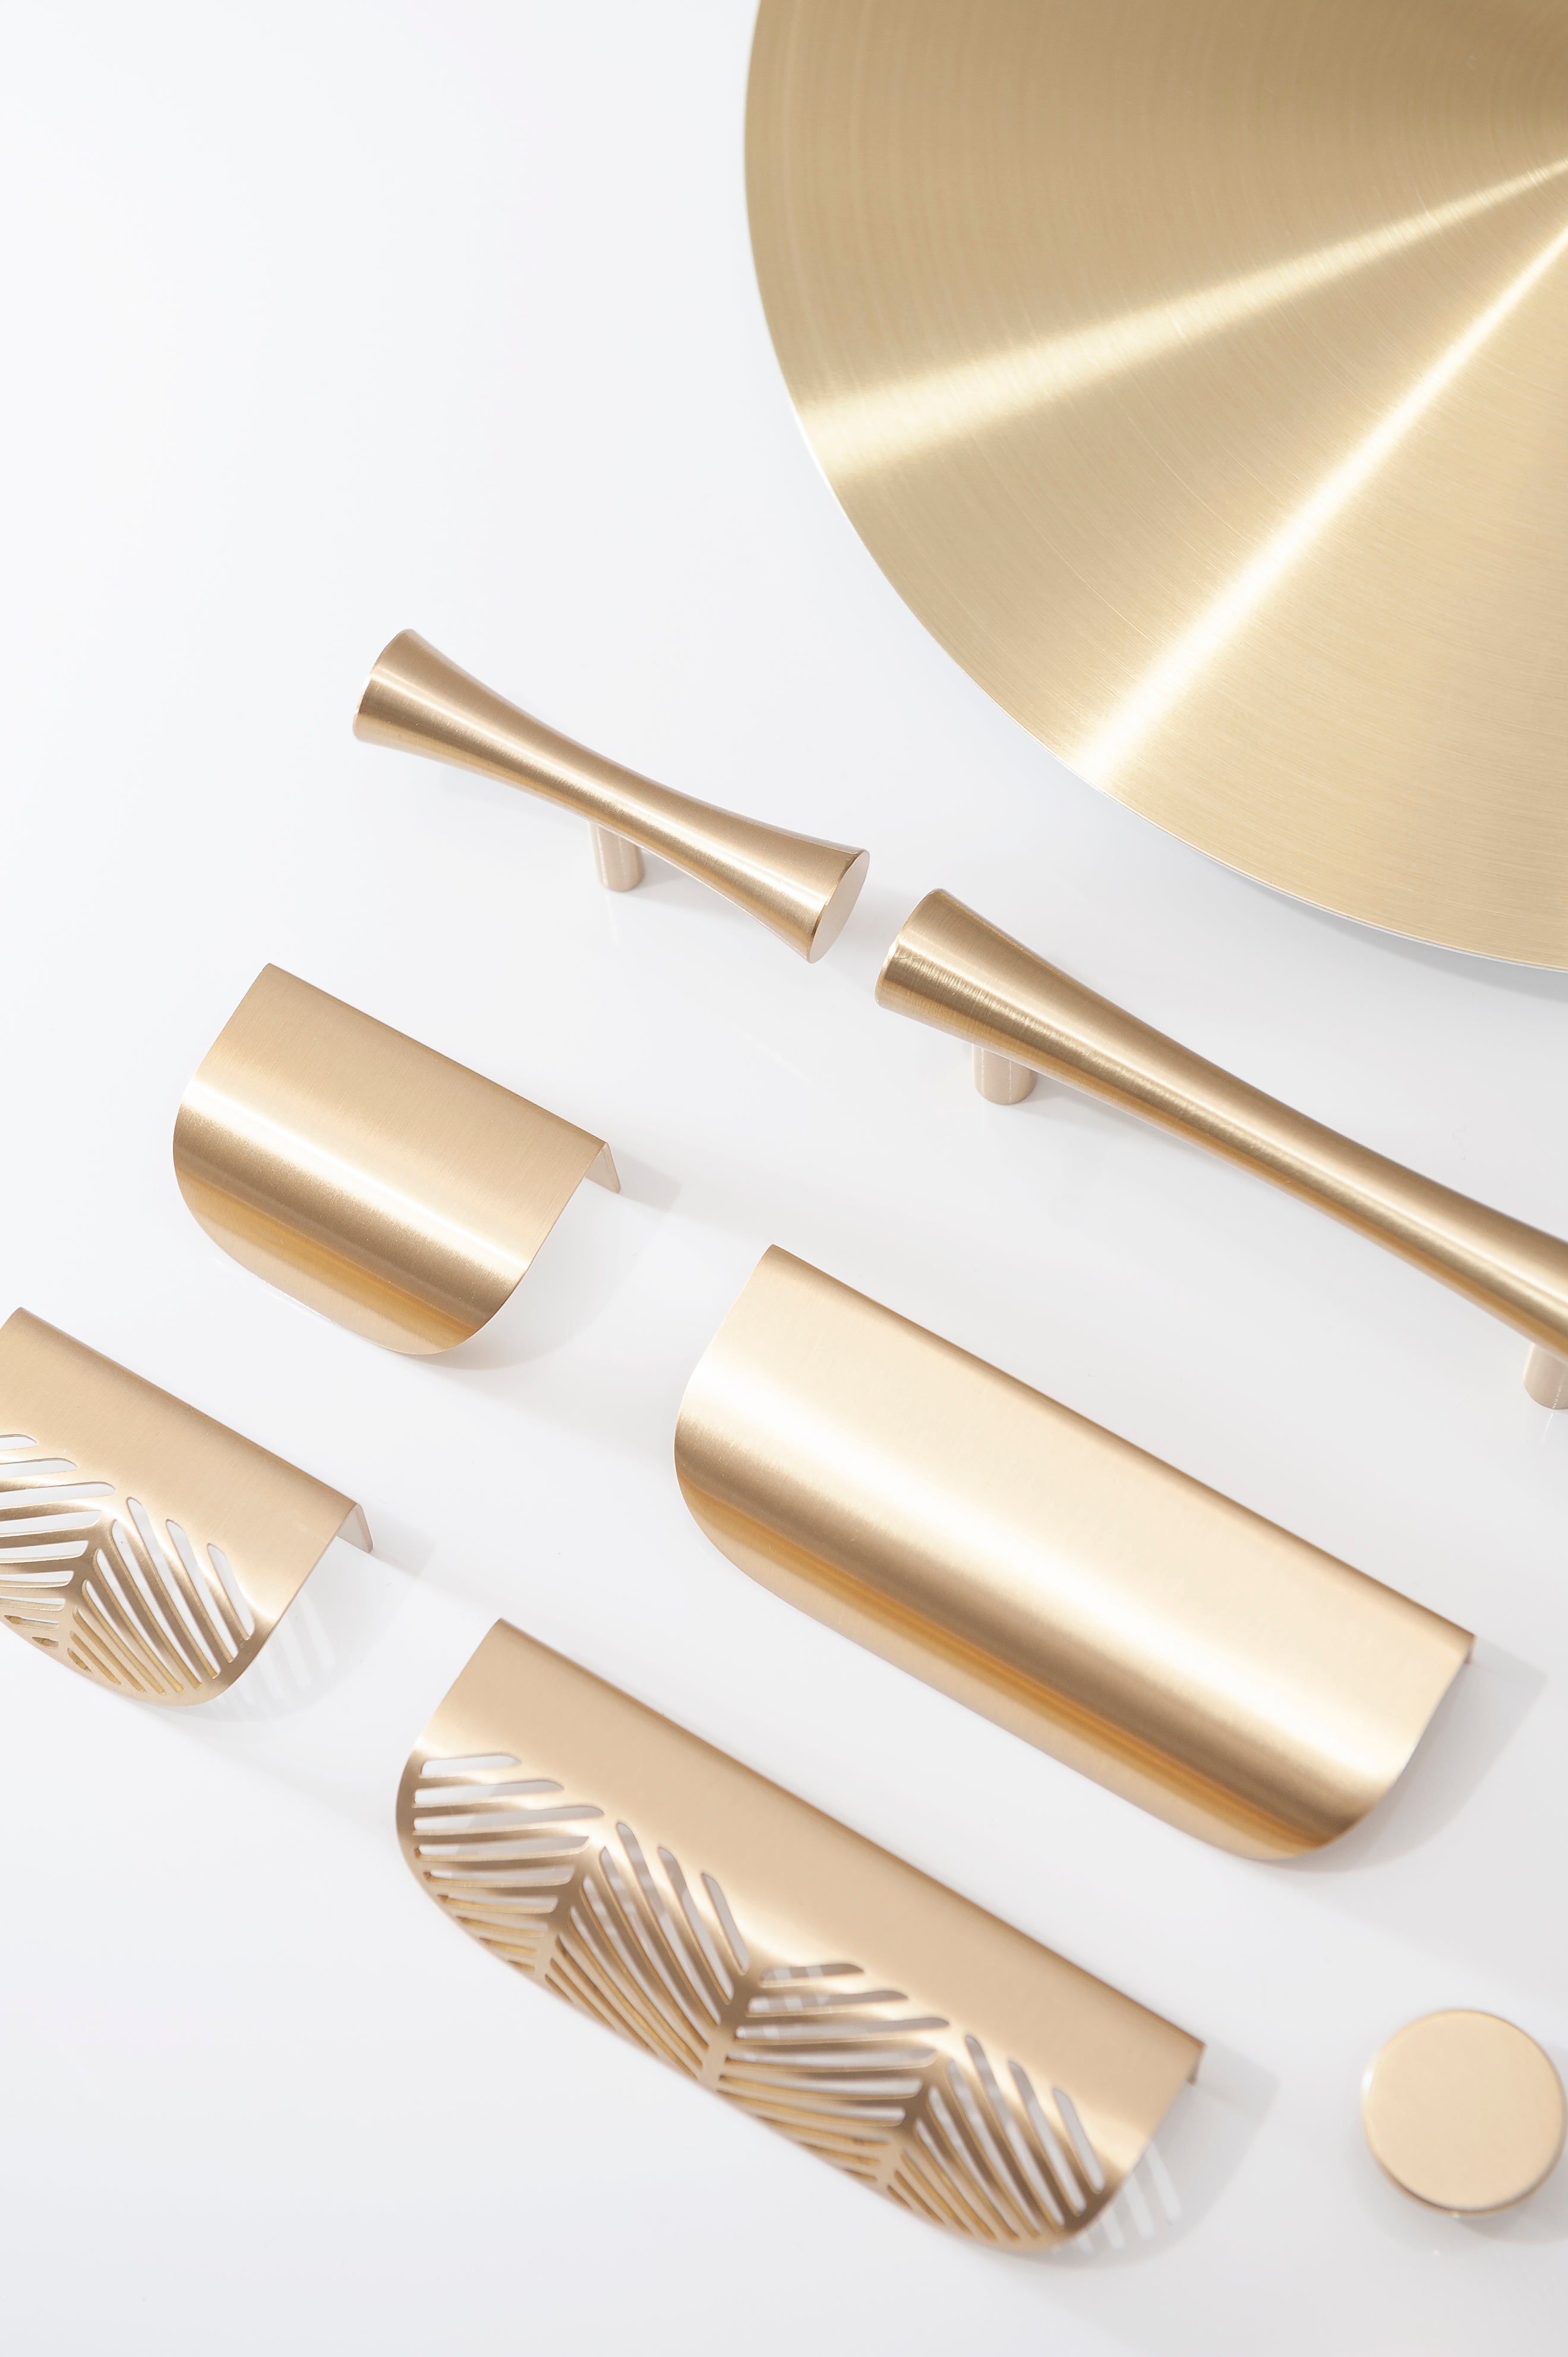 Stunning Solid Brass Handles & Hardware by C S Studios